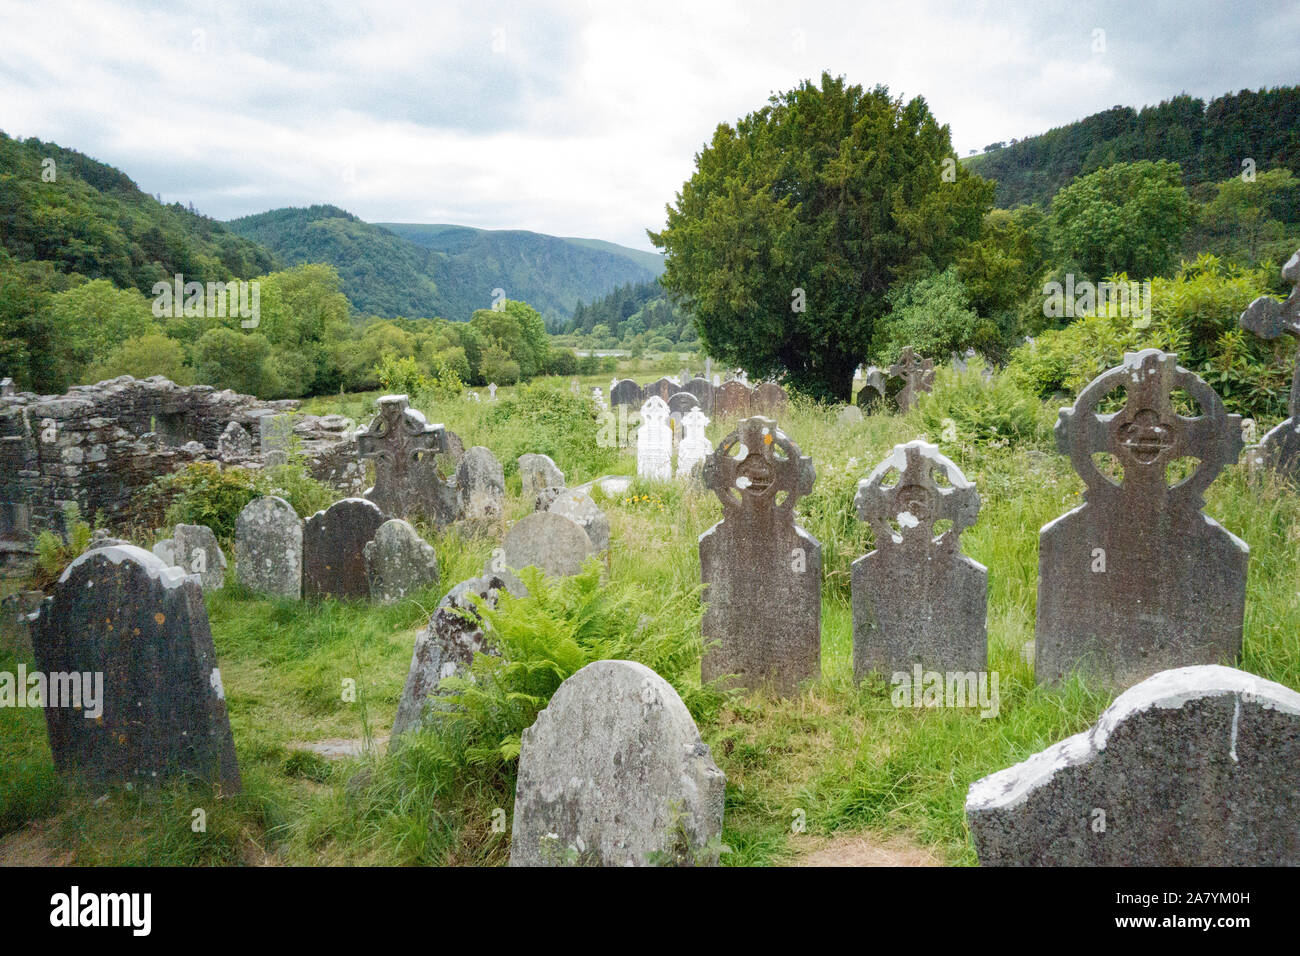 Headstones in an overgrown graveyard at Glendalough, Co. Wicklow, Ireland Stock Photo